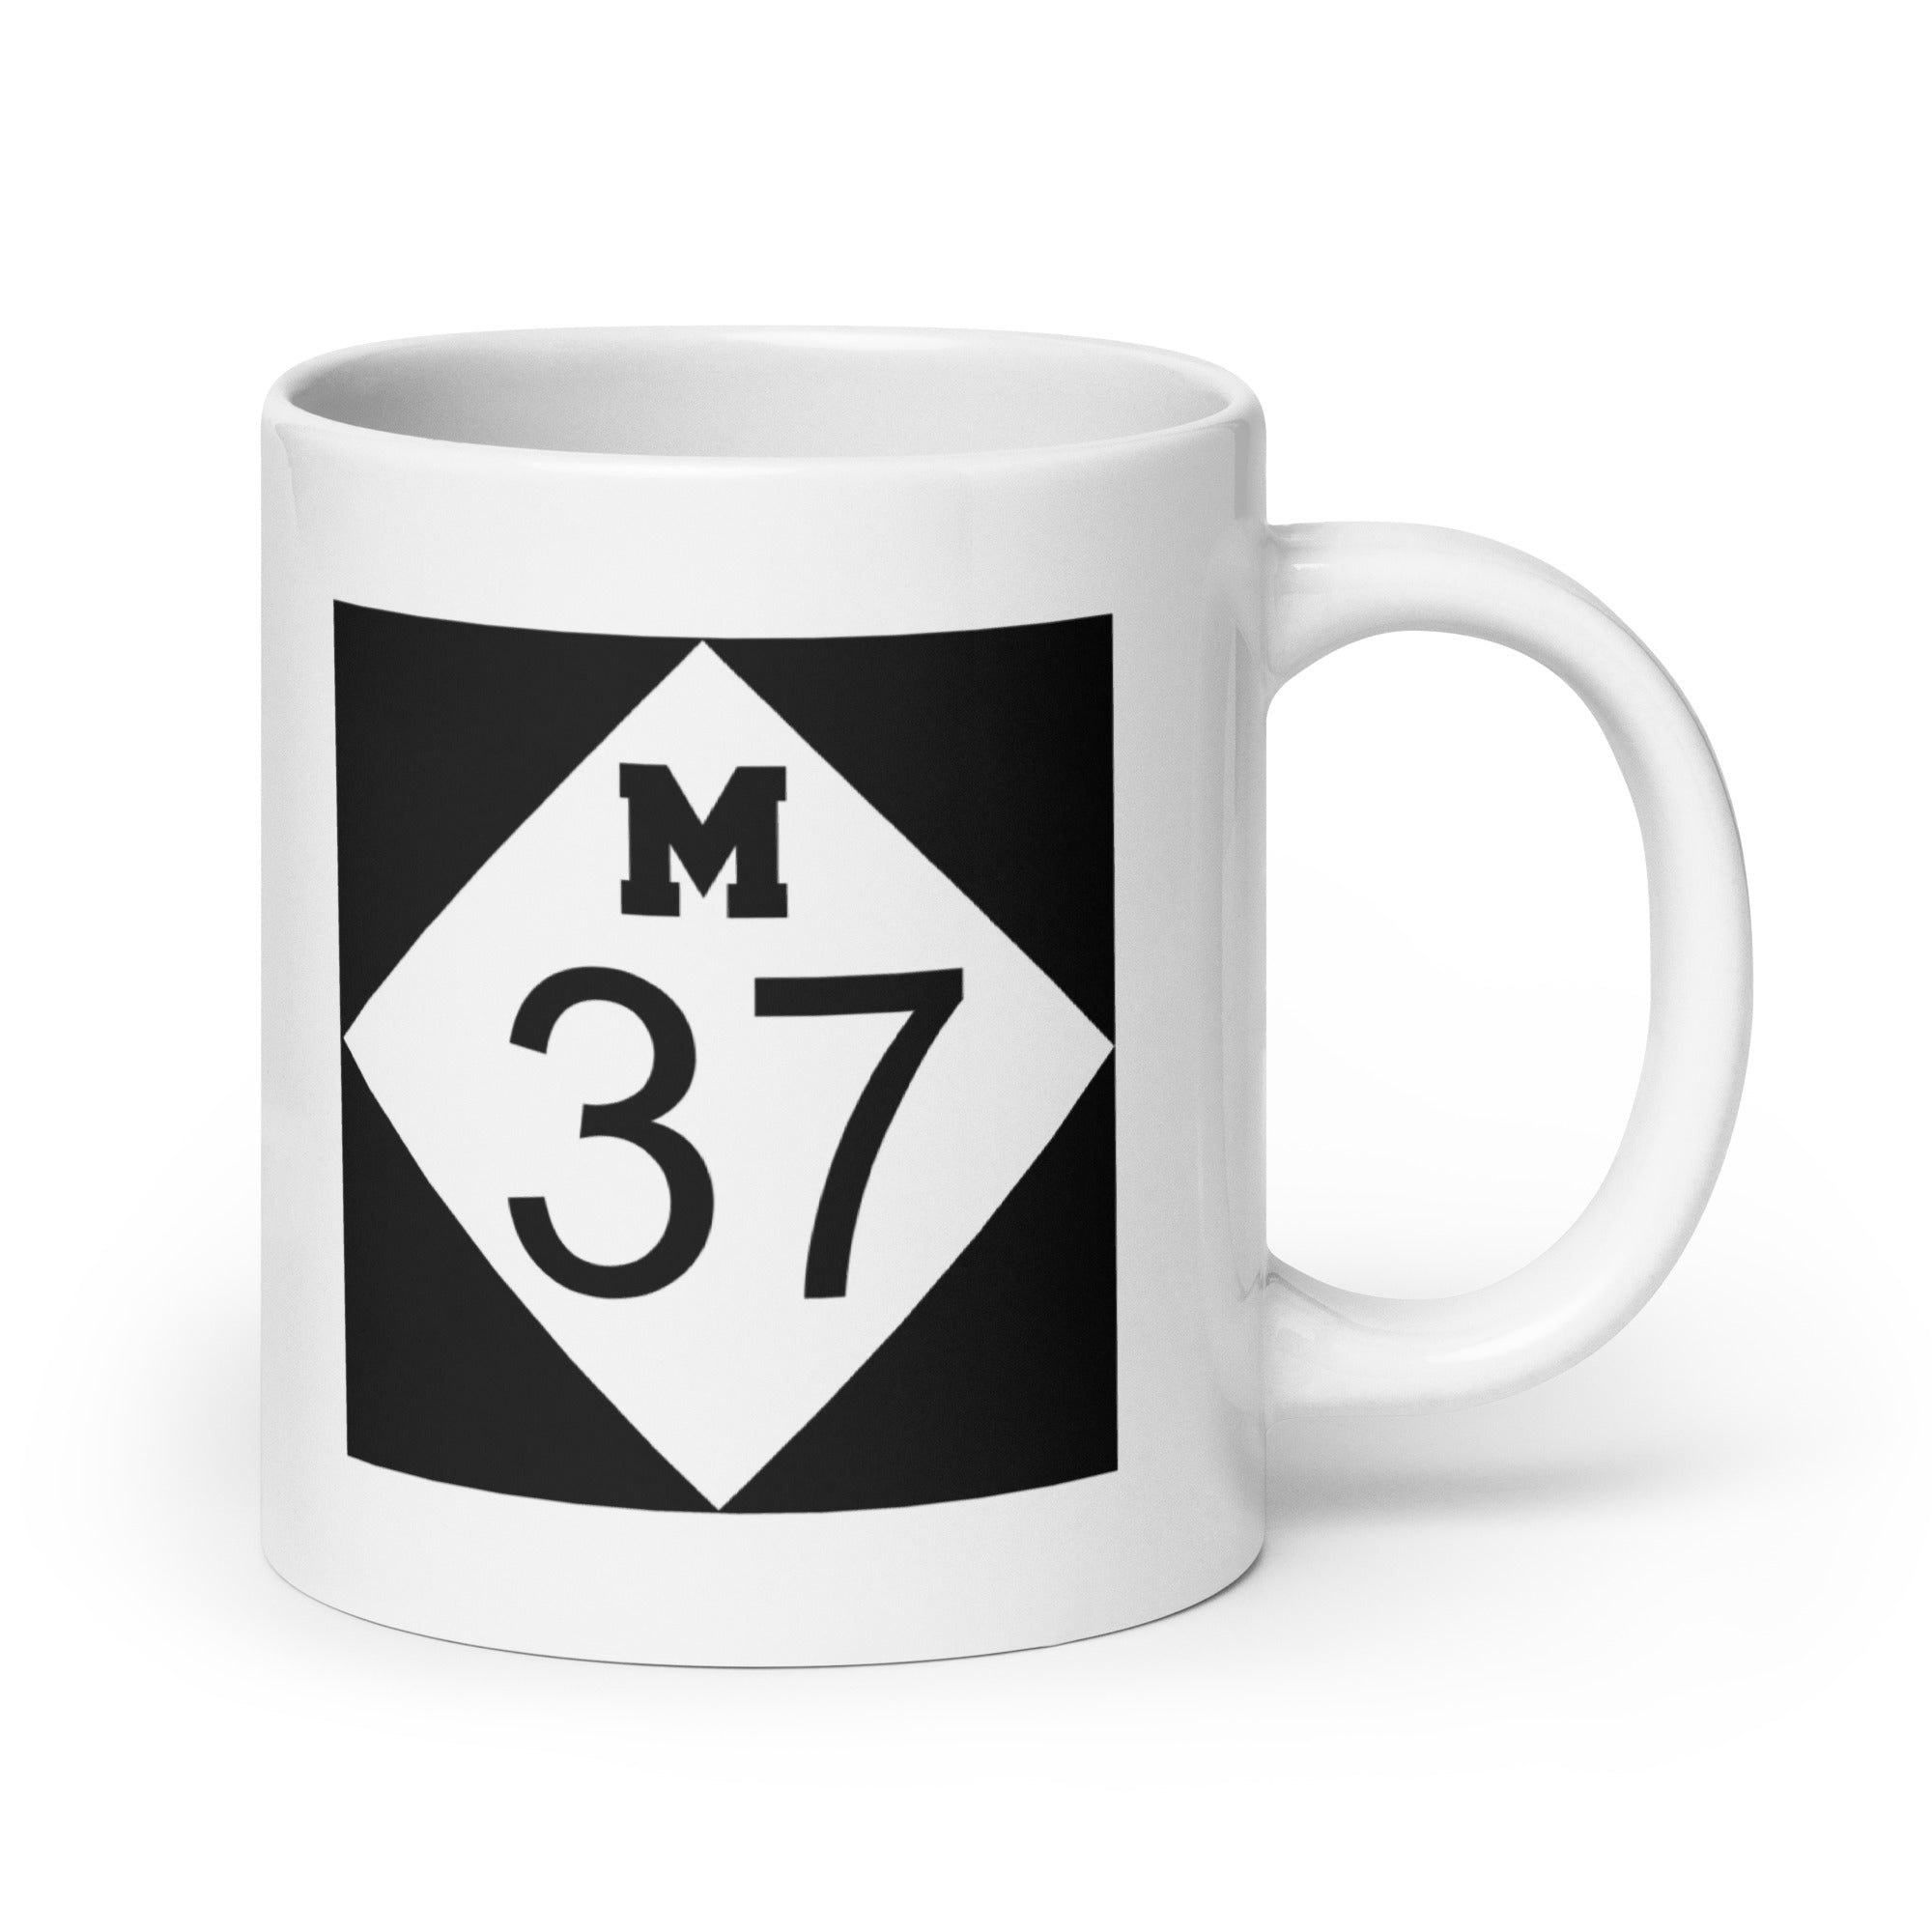 M37 Mug - 3 Sizes